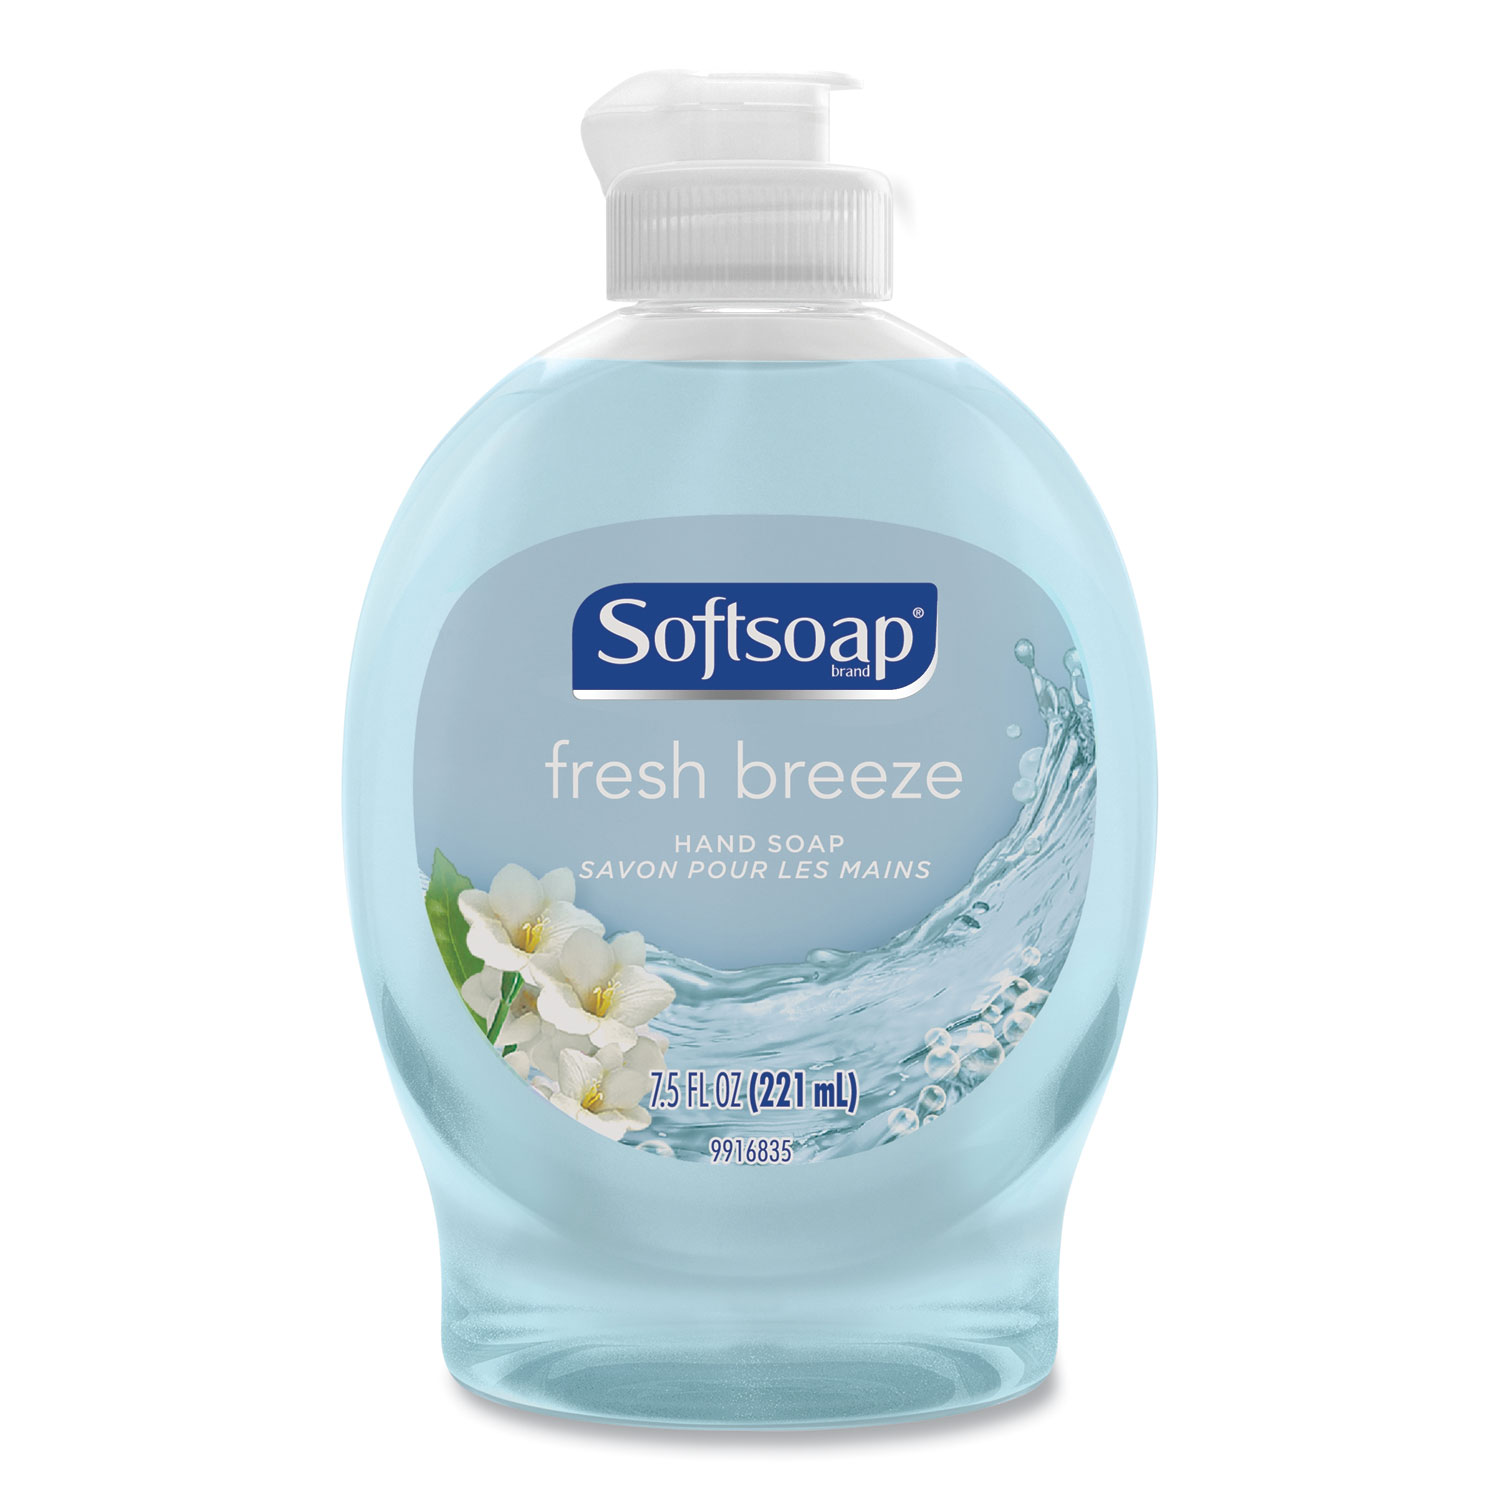  Softsoap US07383A Moisturizing Hand Soap, Fresh Breeze, 7.5 oz Bottle, 6/Carton (CPC98655) 